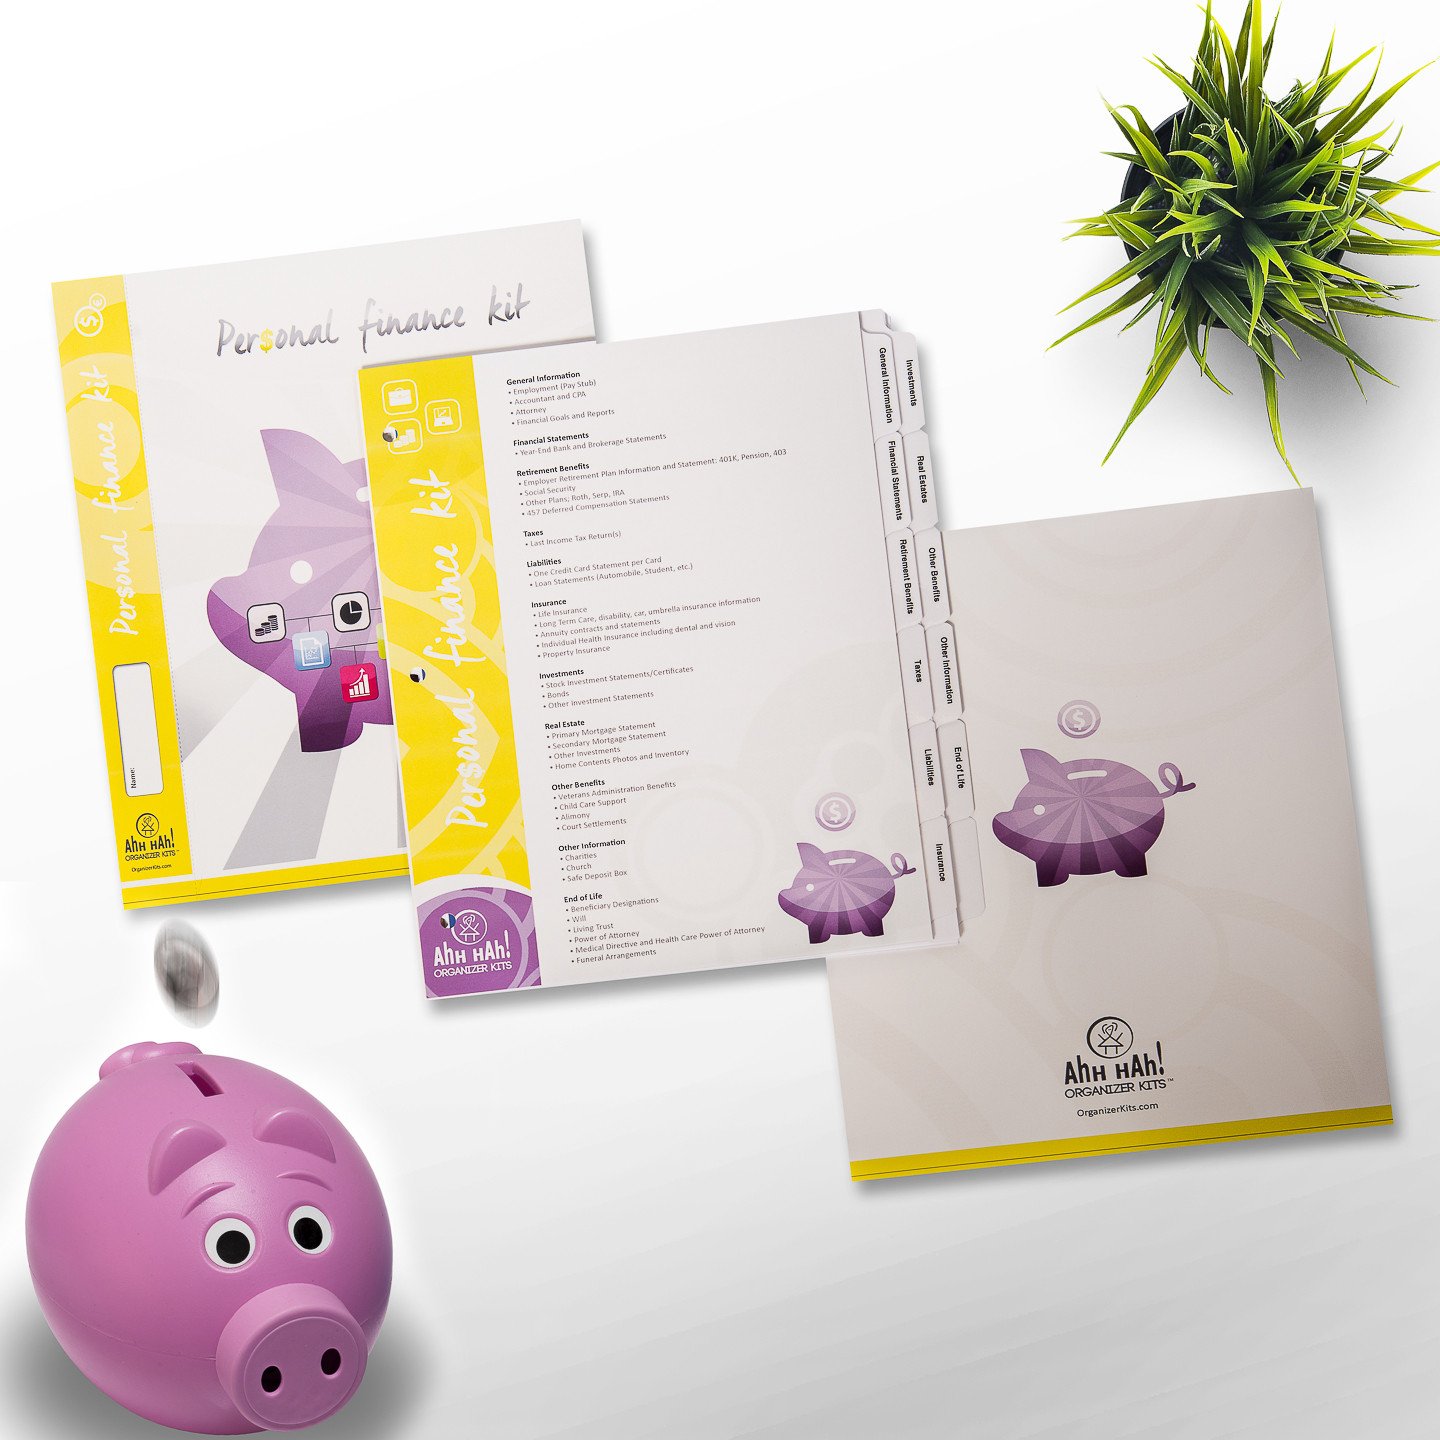 Personal Finance Organizer Kit